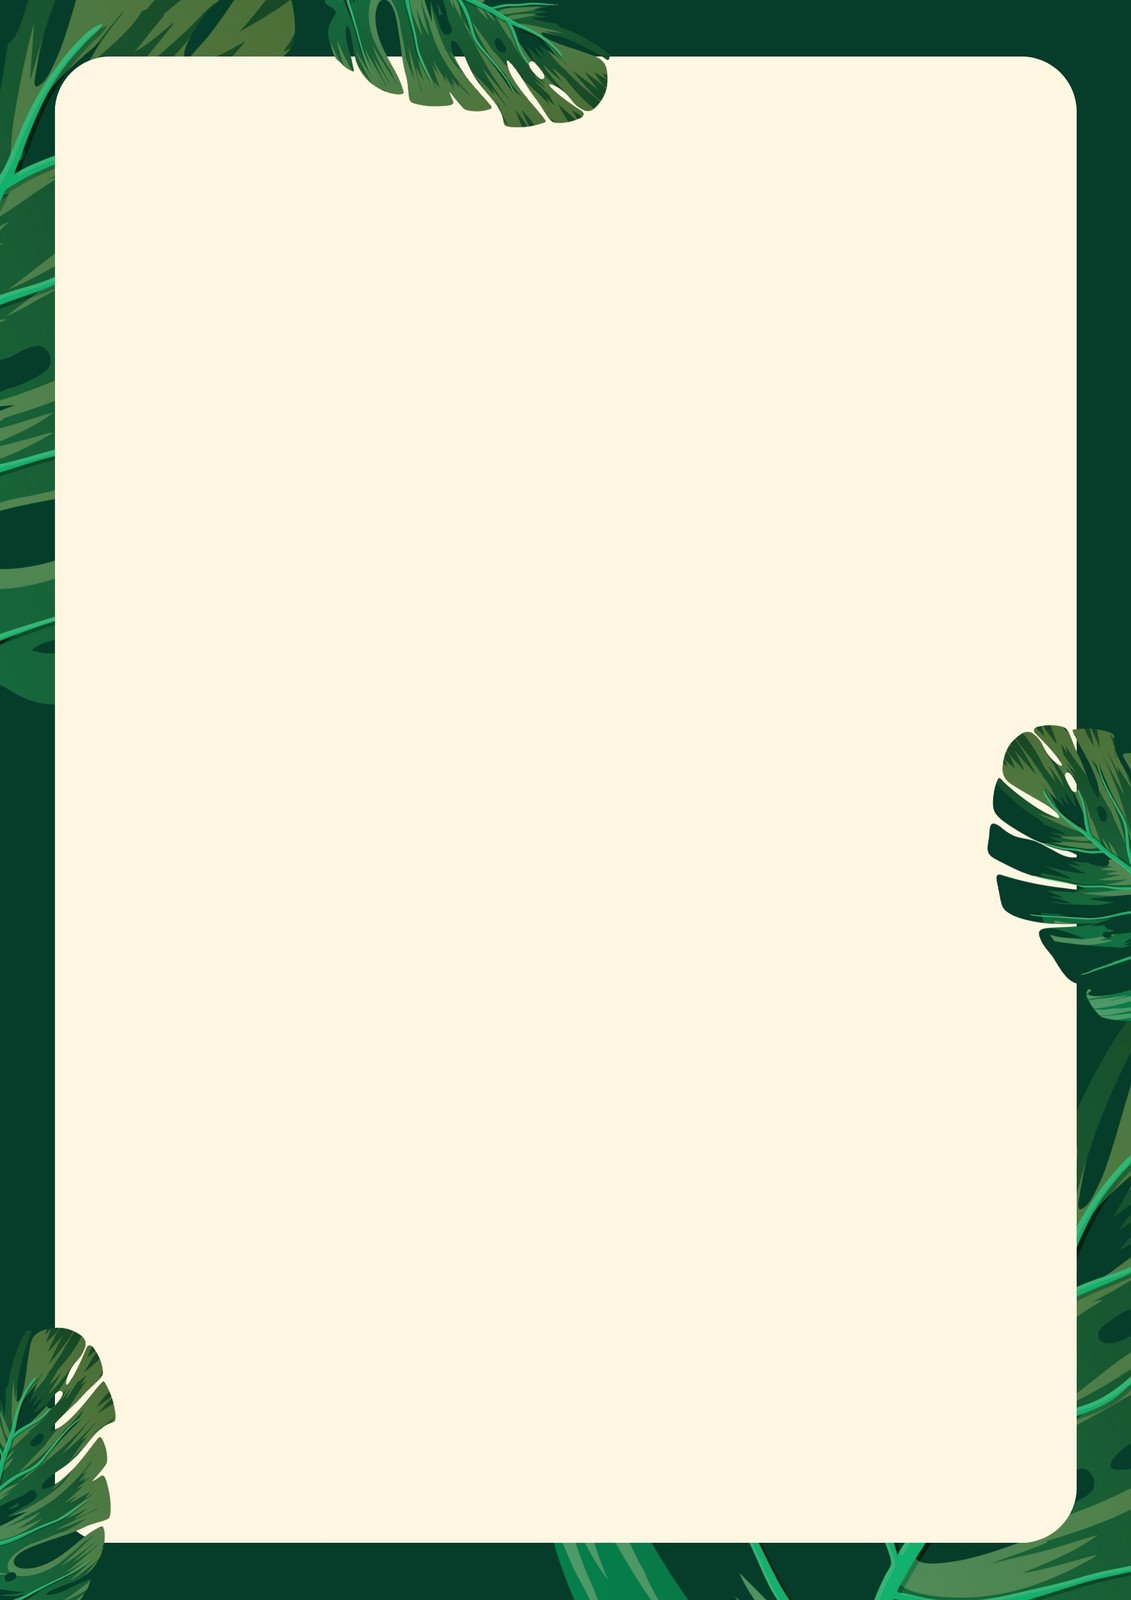 green border design